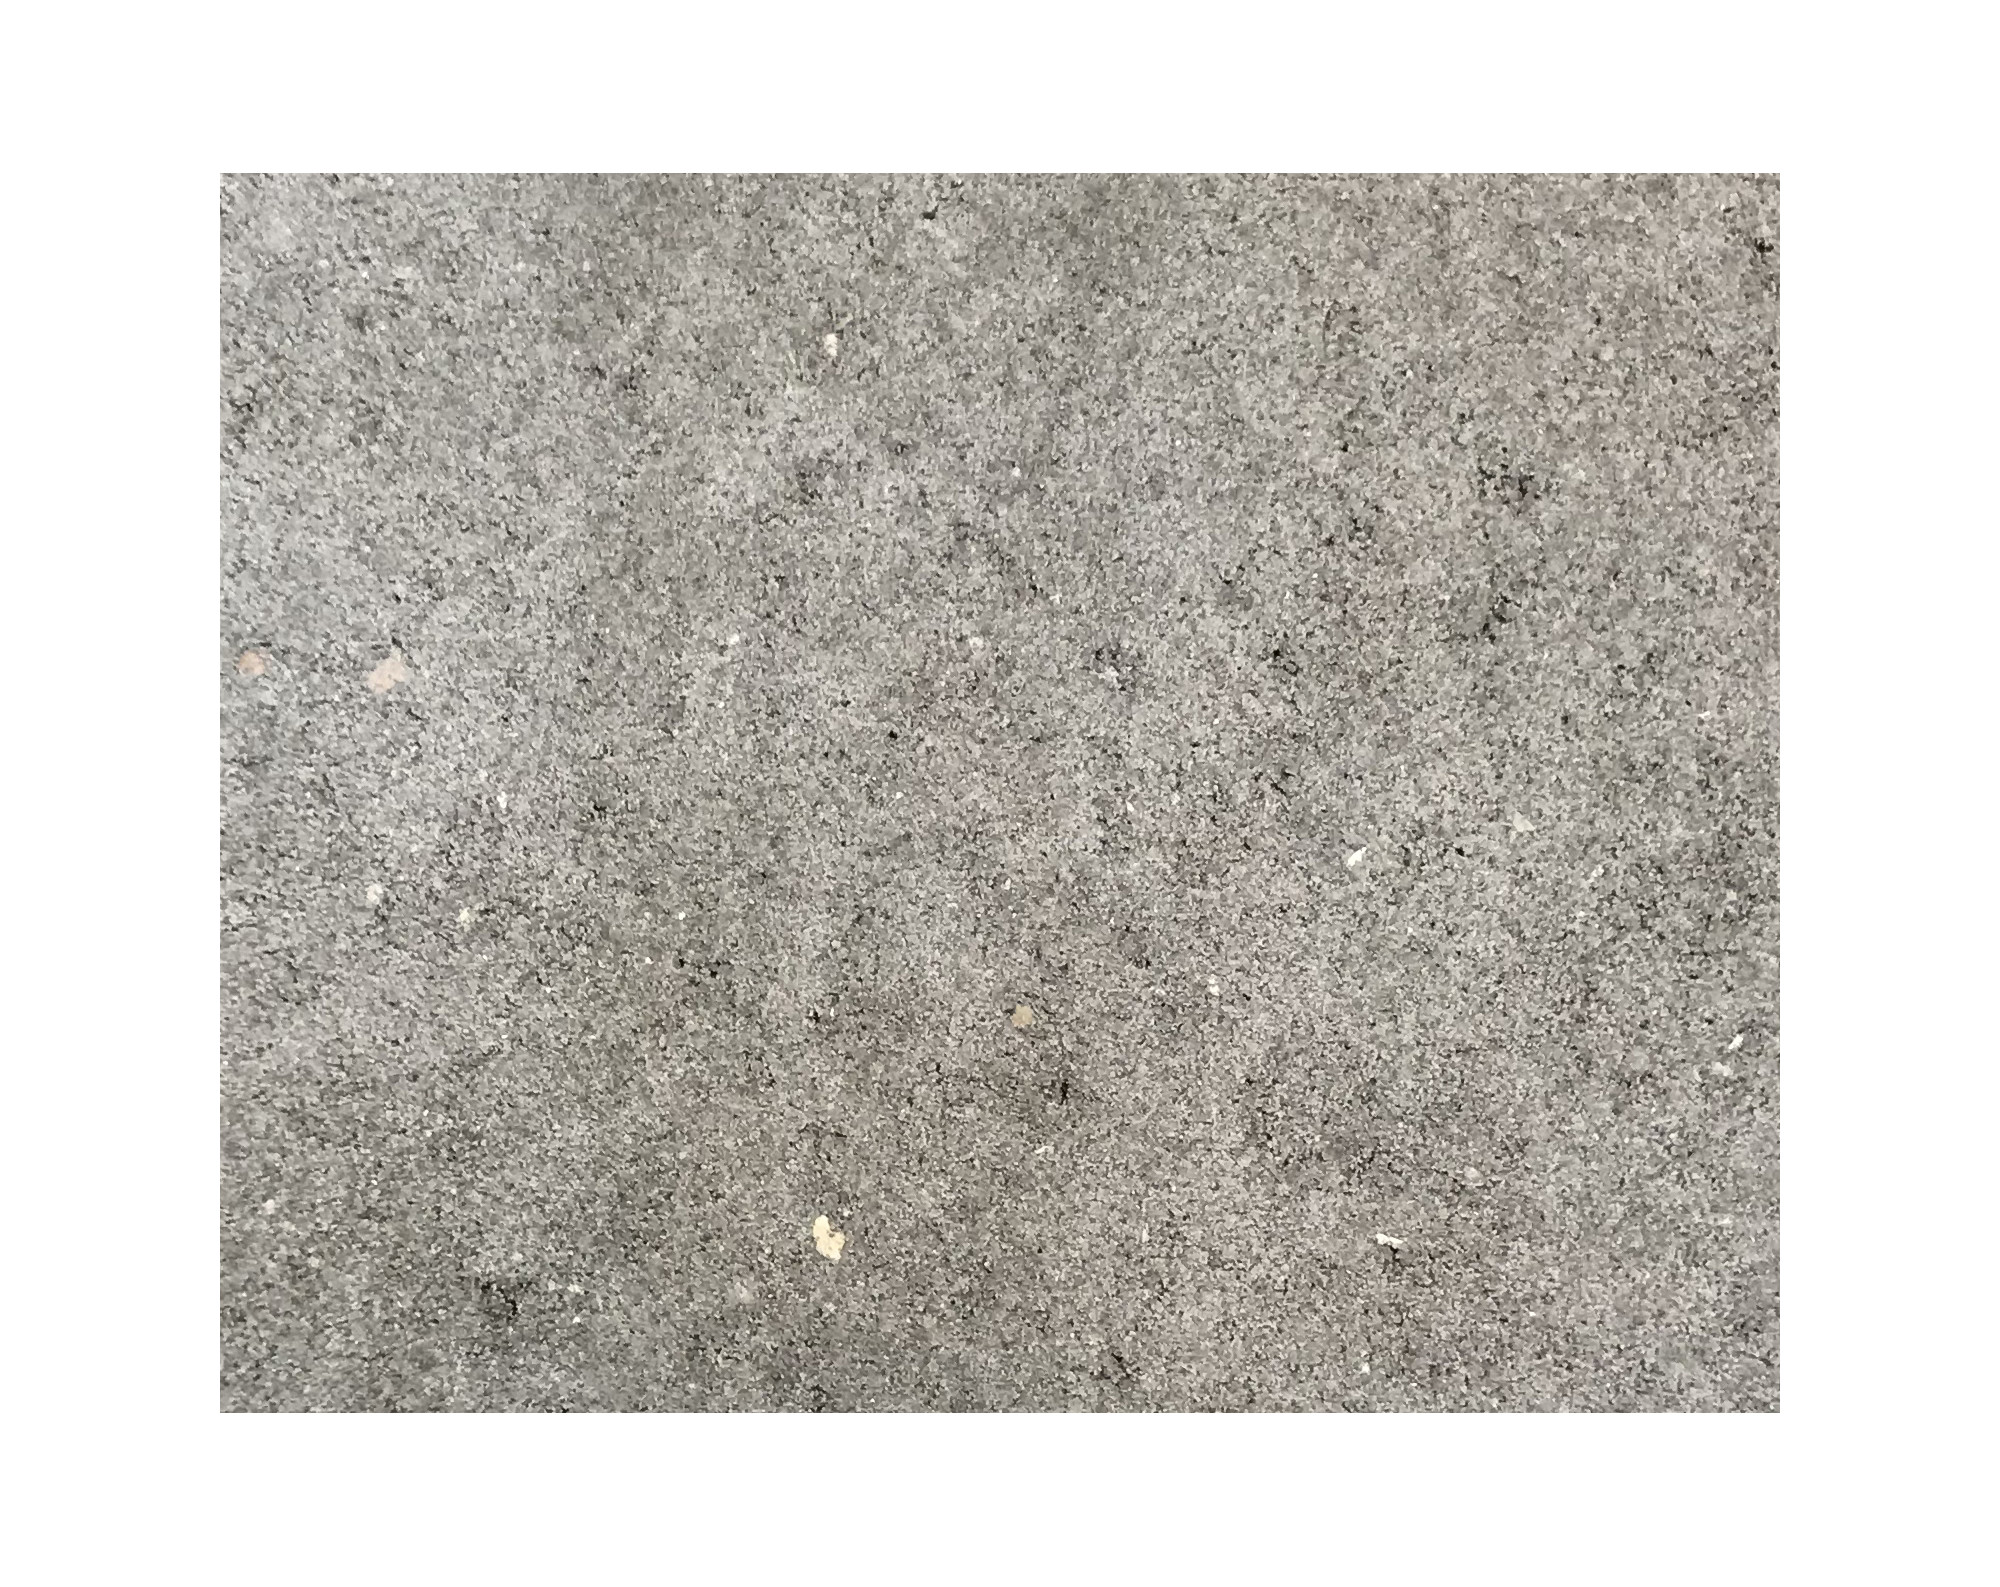 Harmo roc nevadaset, rustica-serie, rond d:4,20m, grijs, beton